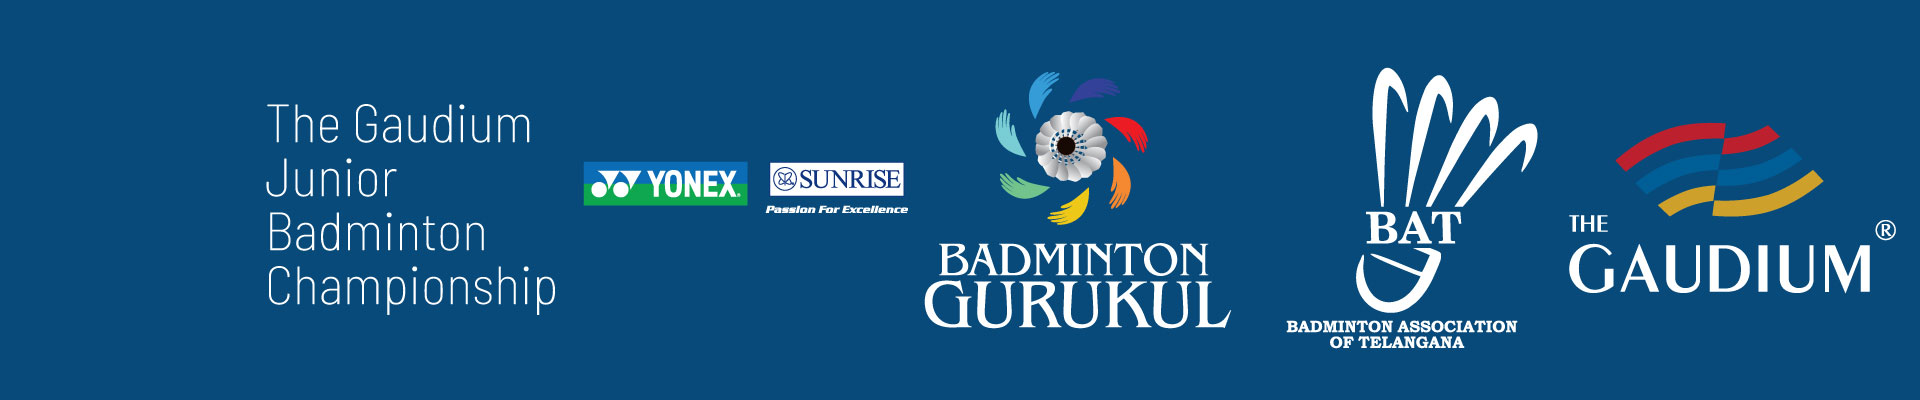 The Gaudium Junior Badminton Championship Webpage Header New 2021 10